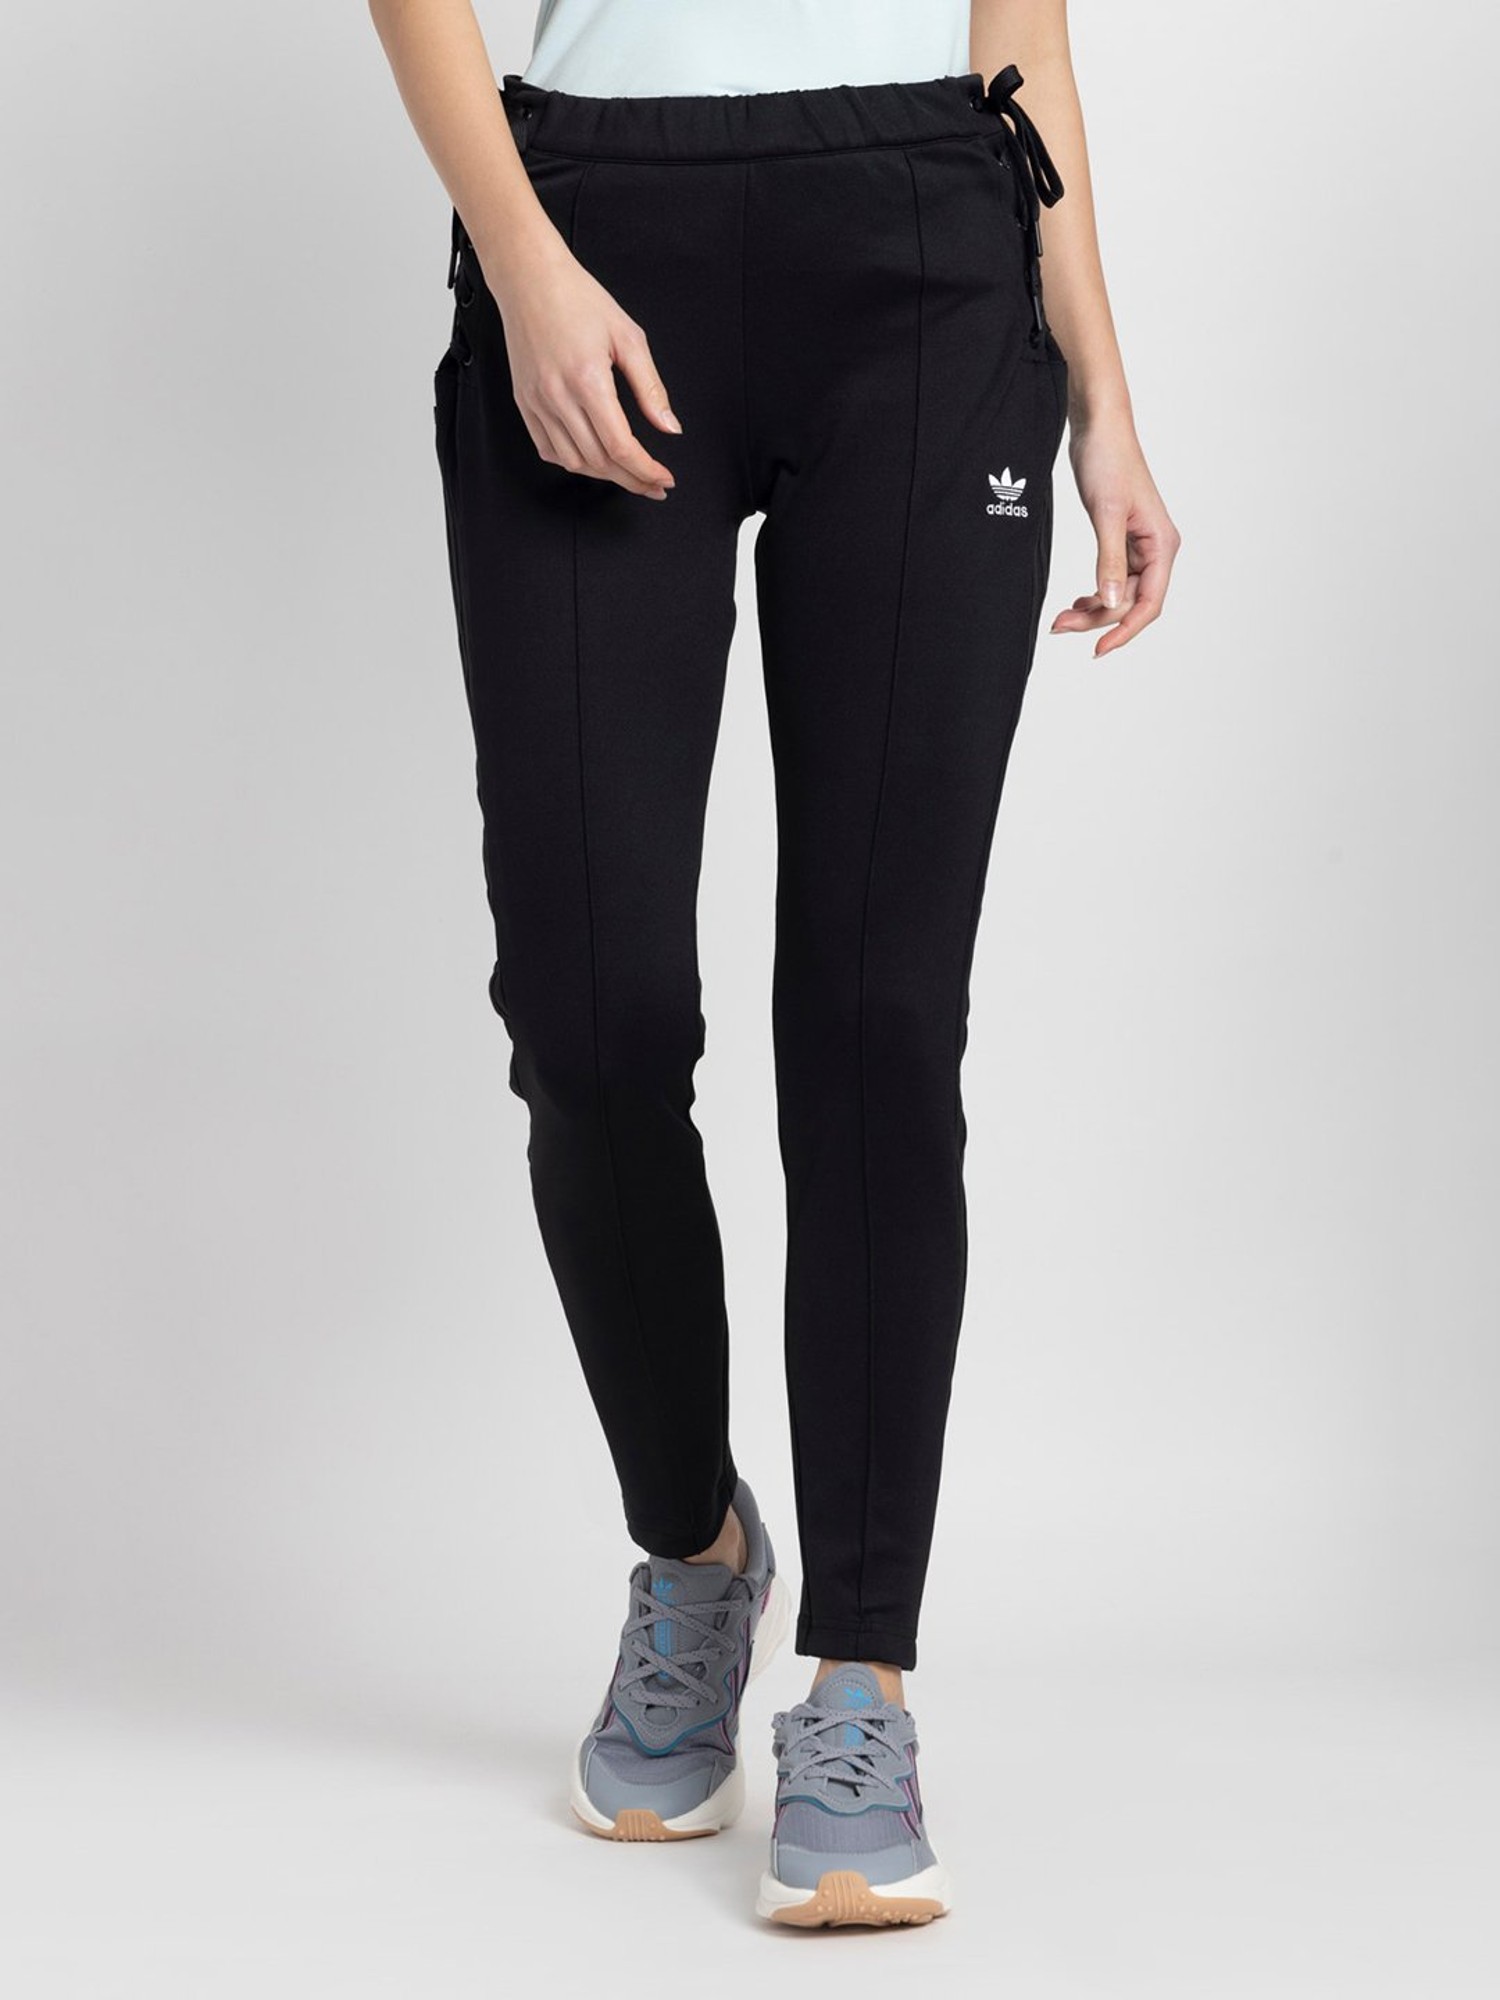 Buy Adidas Originals Black Track Pants for Women's Online @ Tata